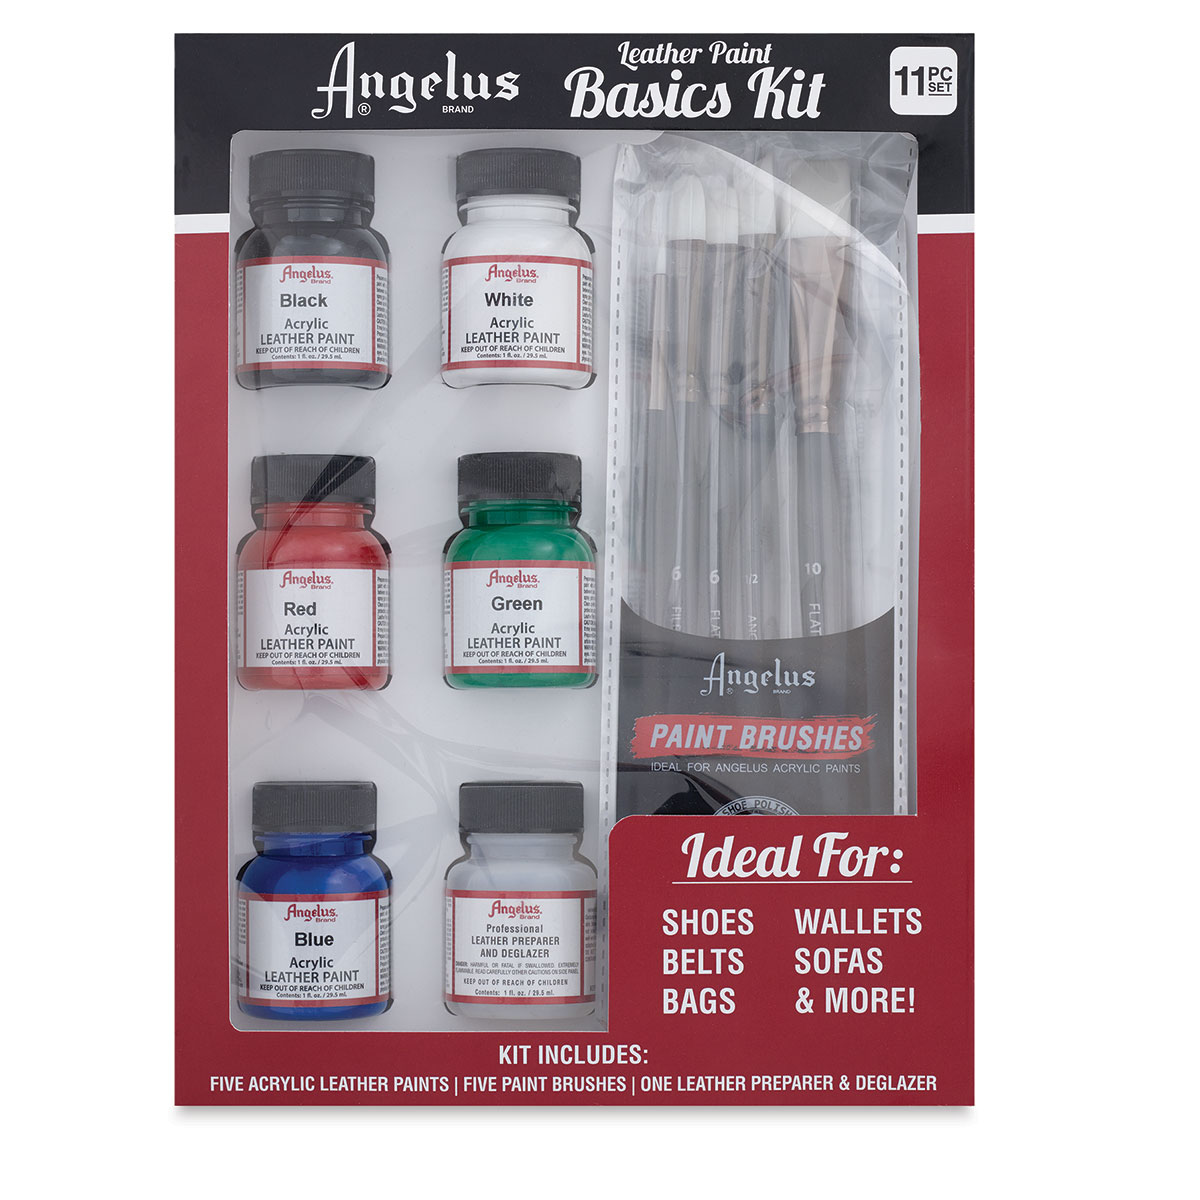 angelus acrylic leather paint starter kit